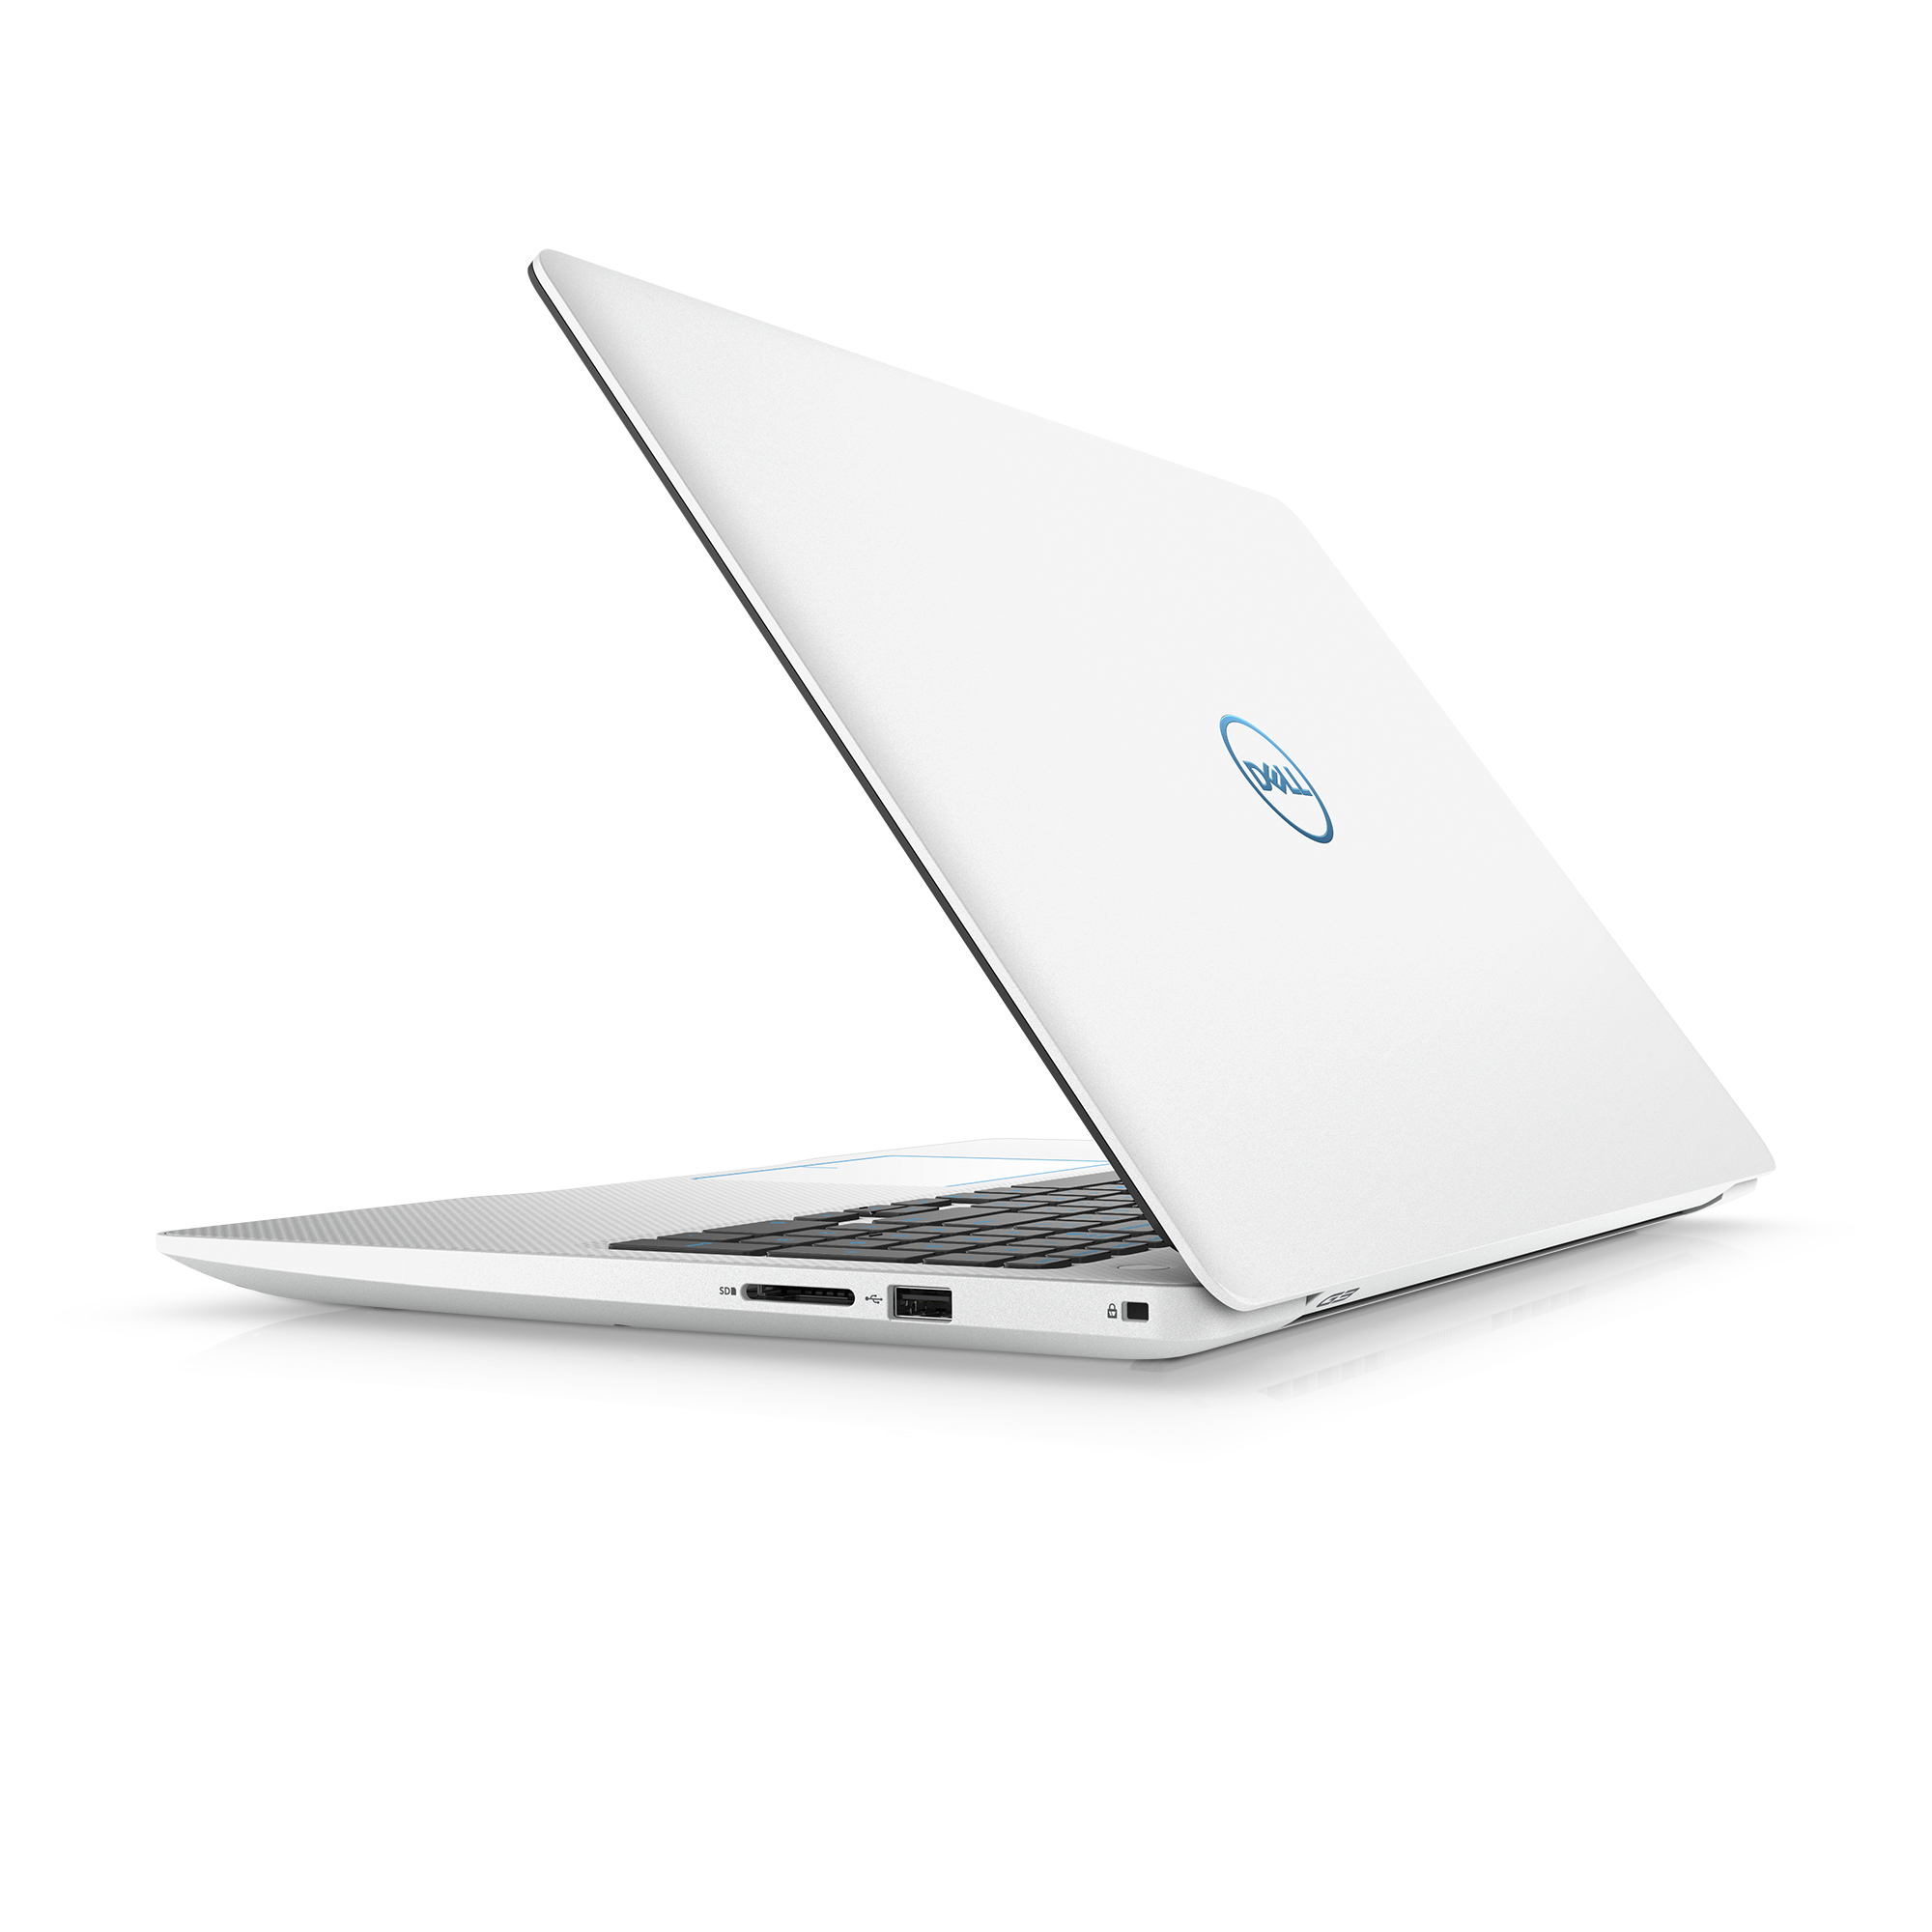 Dell G3 Gaming Laptop 15.6" Full HD, Intel Core i7-8750H, NVIDIA GeForce GTX 1050 Ti 4GB, 1TB HDD + 128GB SSD, 8GB RAM, G3579-7054WHT - image 4 of 6